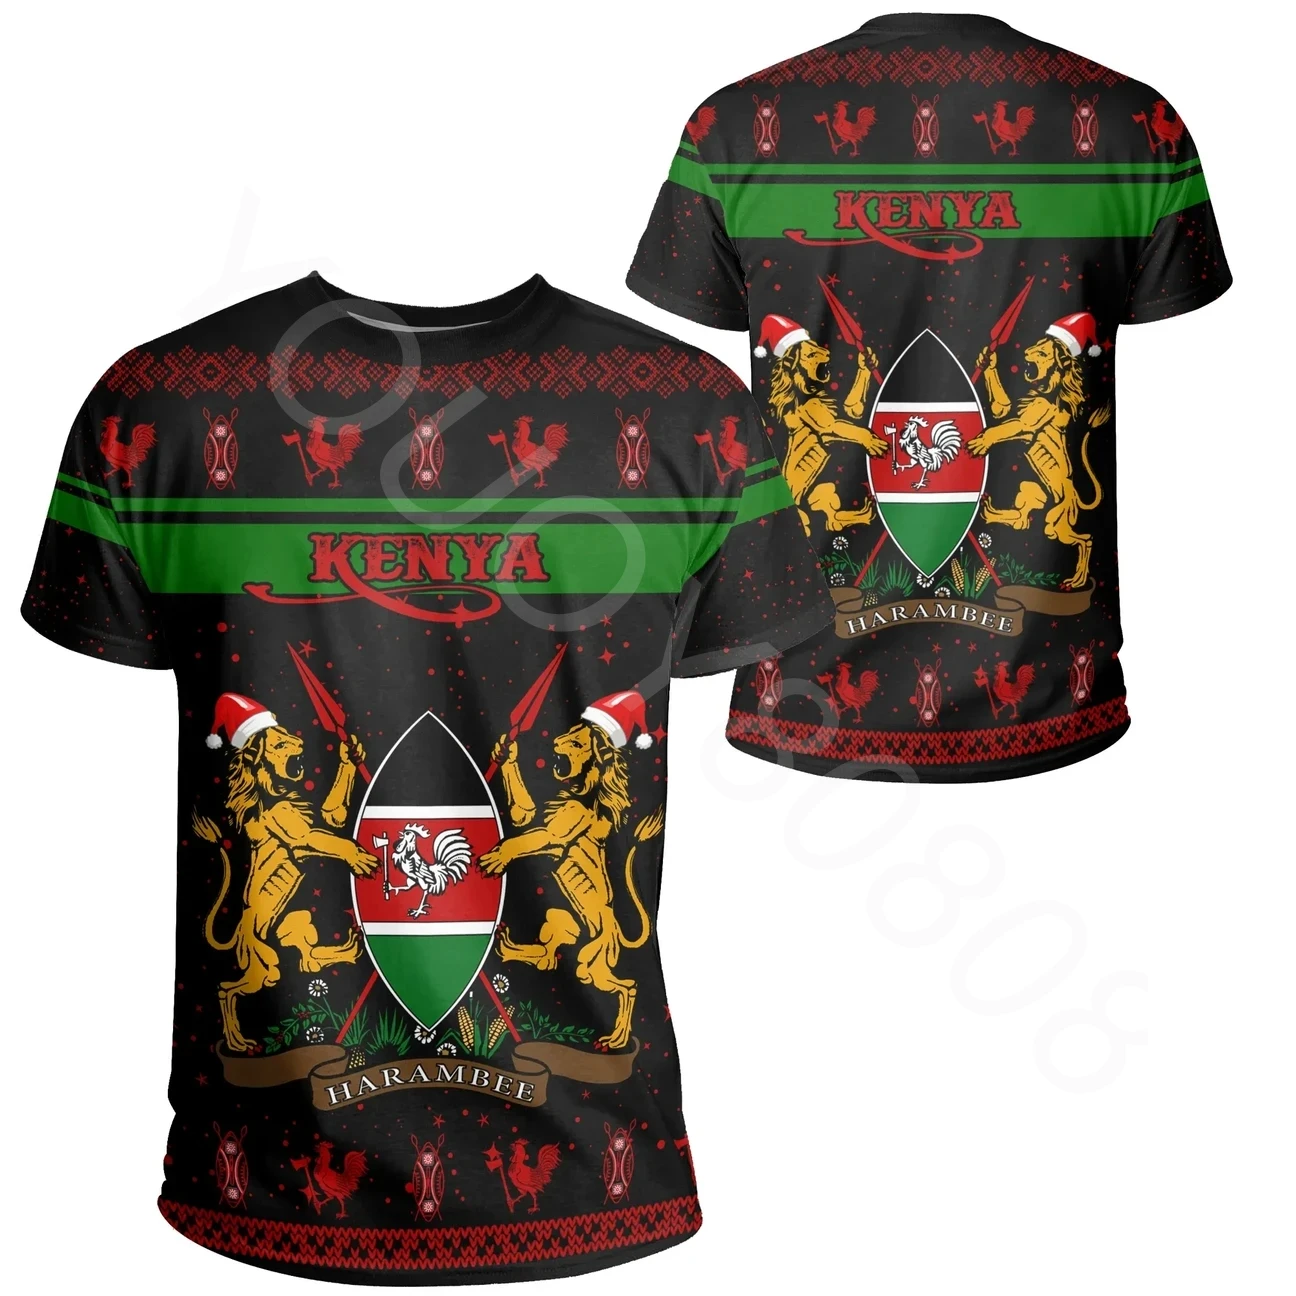 

New Summer Country Men's Short Sleeve Street Fashion 3D Printed T-Shirt Africa Region - Kenya Christmas T-Shirt